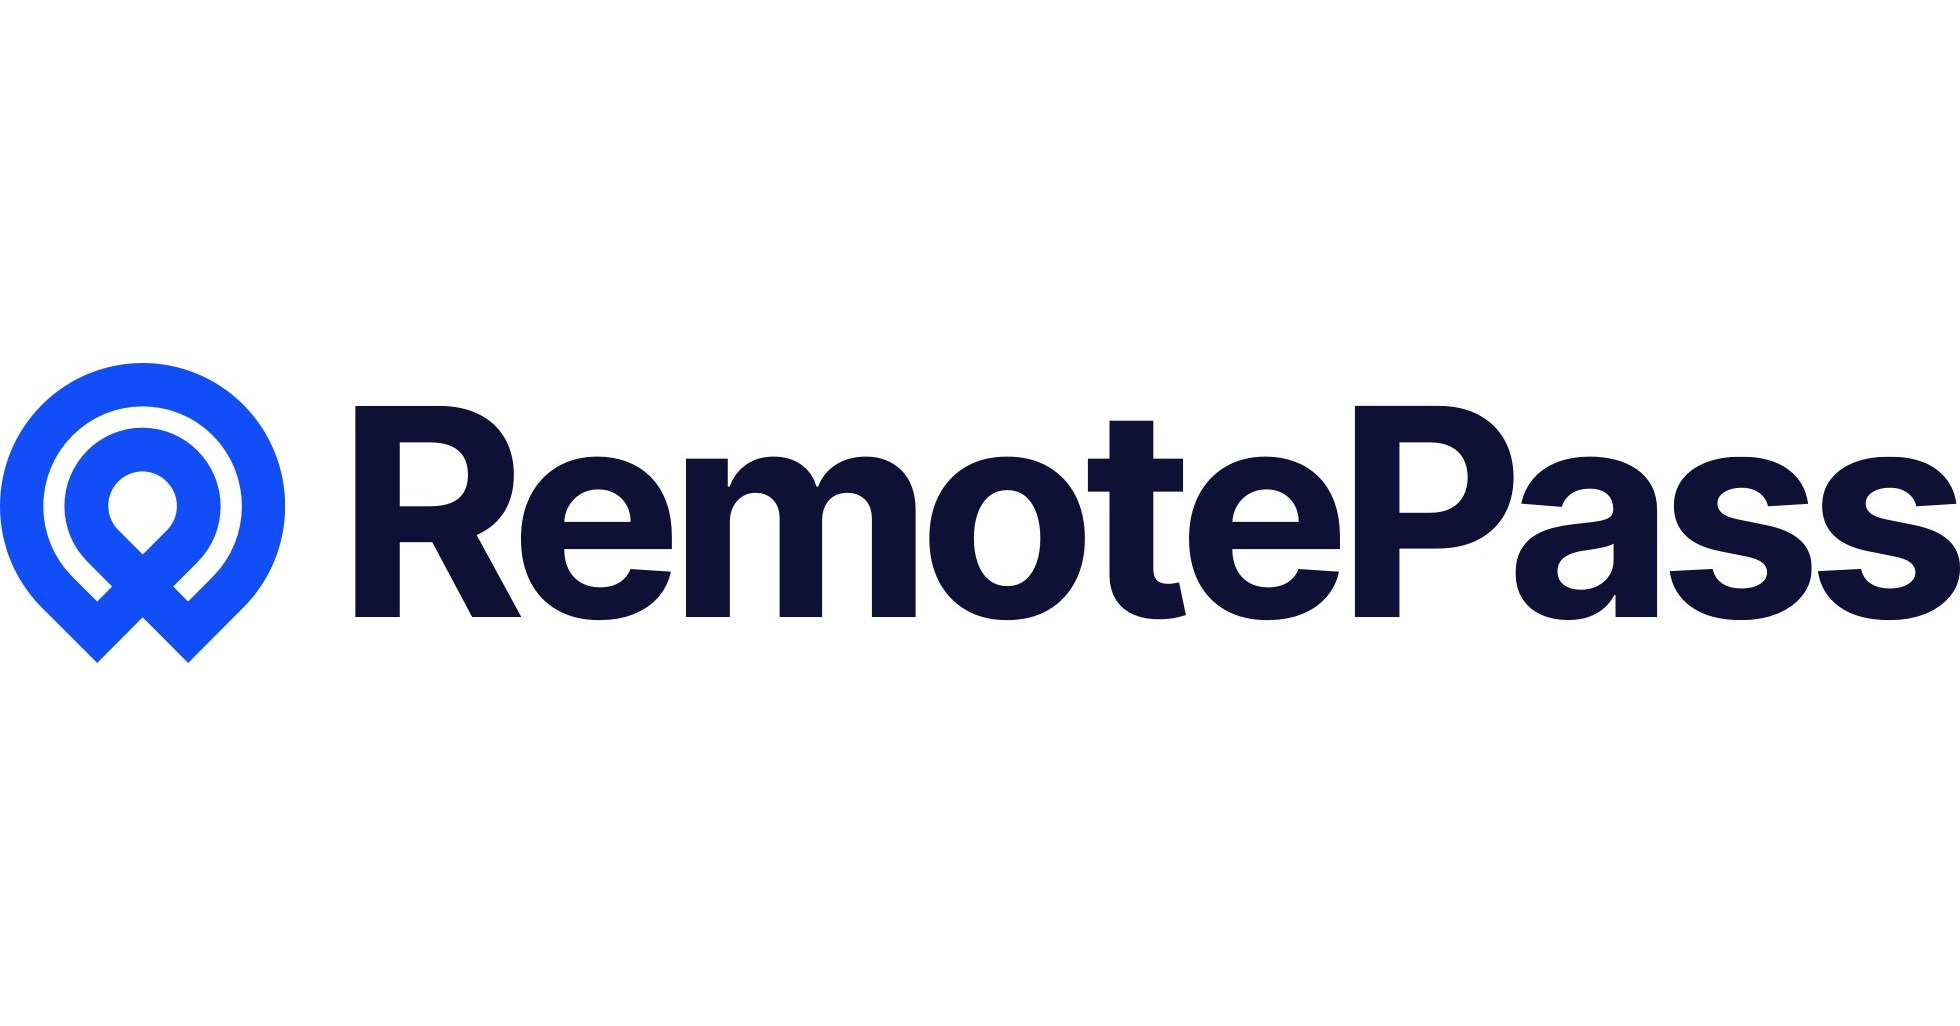 RemotePass Secures $5.5M To Revolutionize Remote Work Management